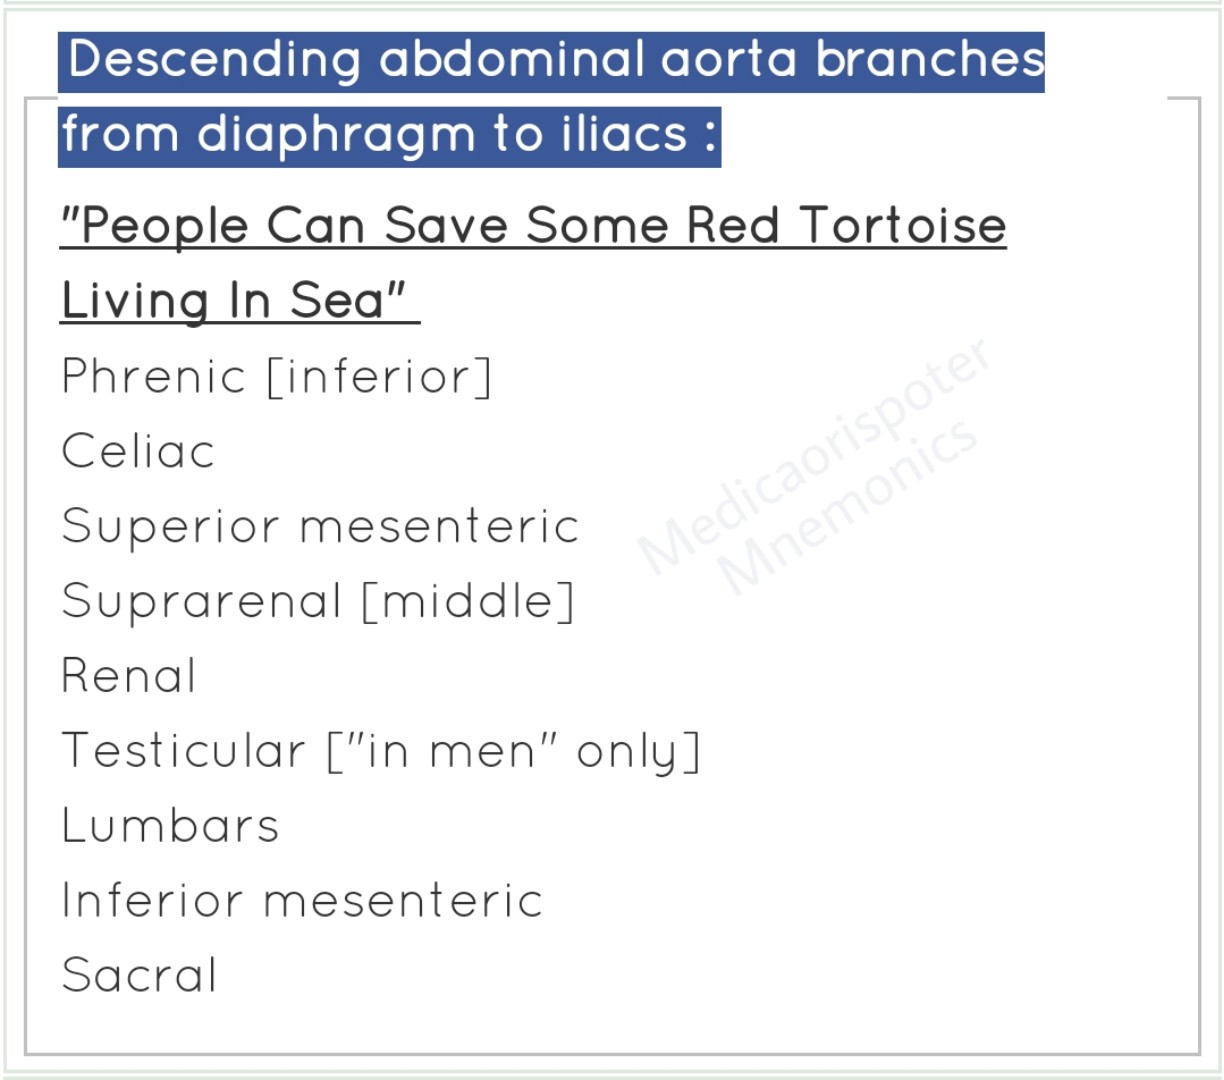 Branches of Descending Abdominal Aorta to Iliac